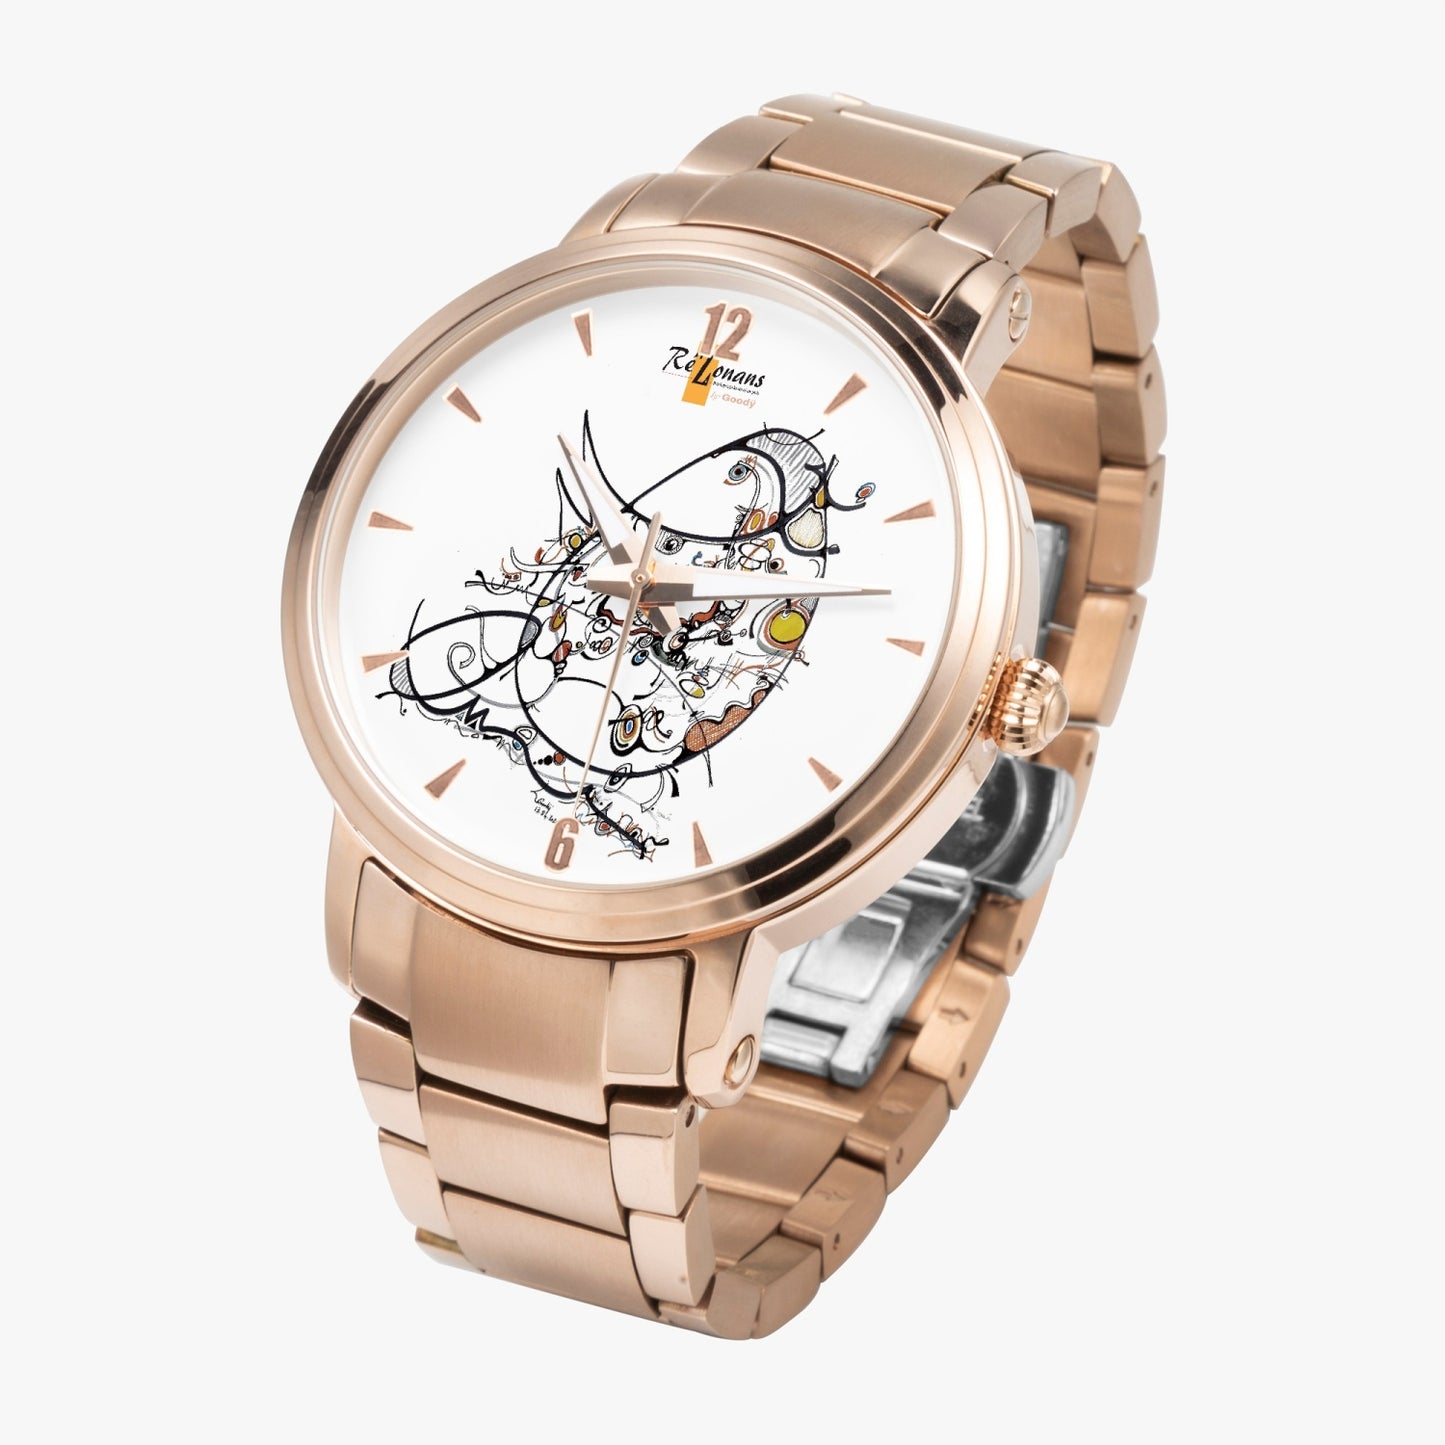 "Kaomond" steel bracelet automatic watch (with indicator)